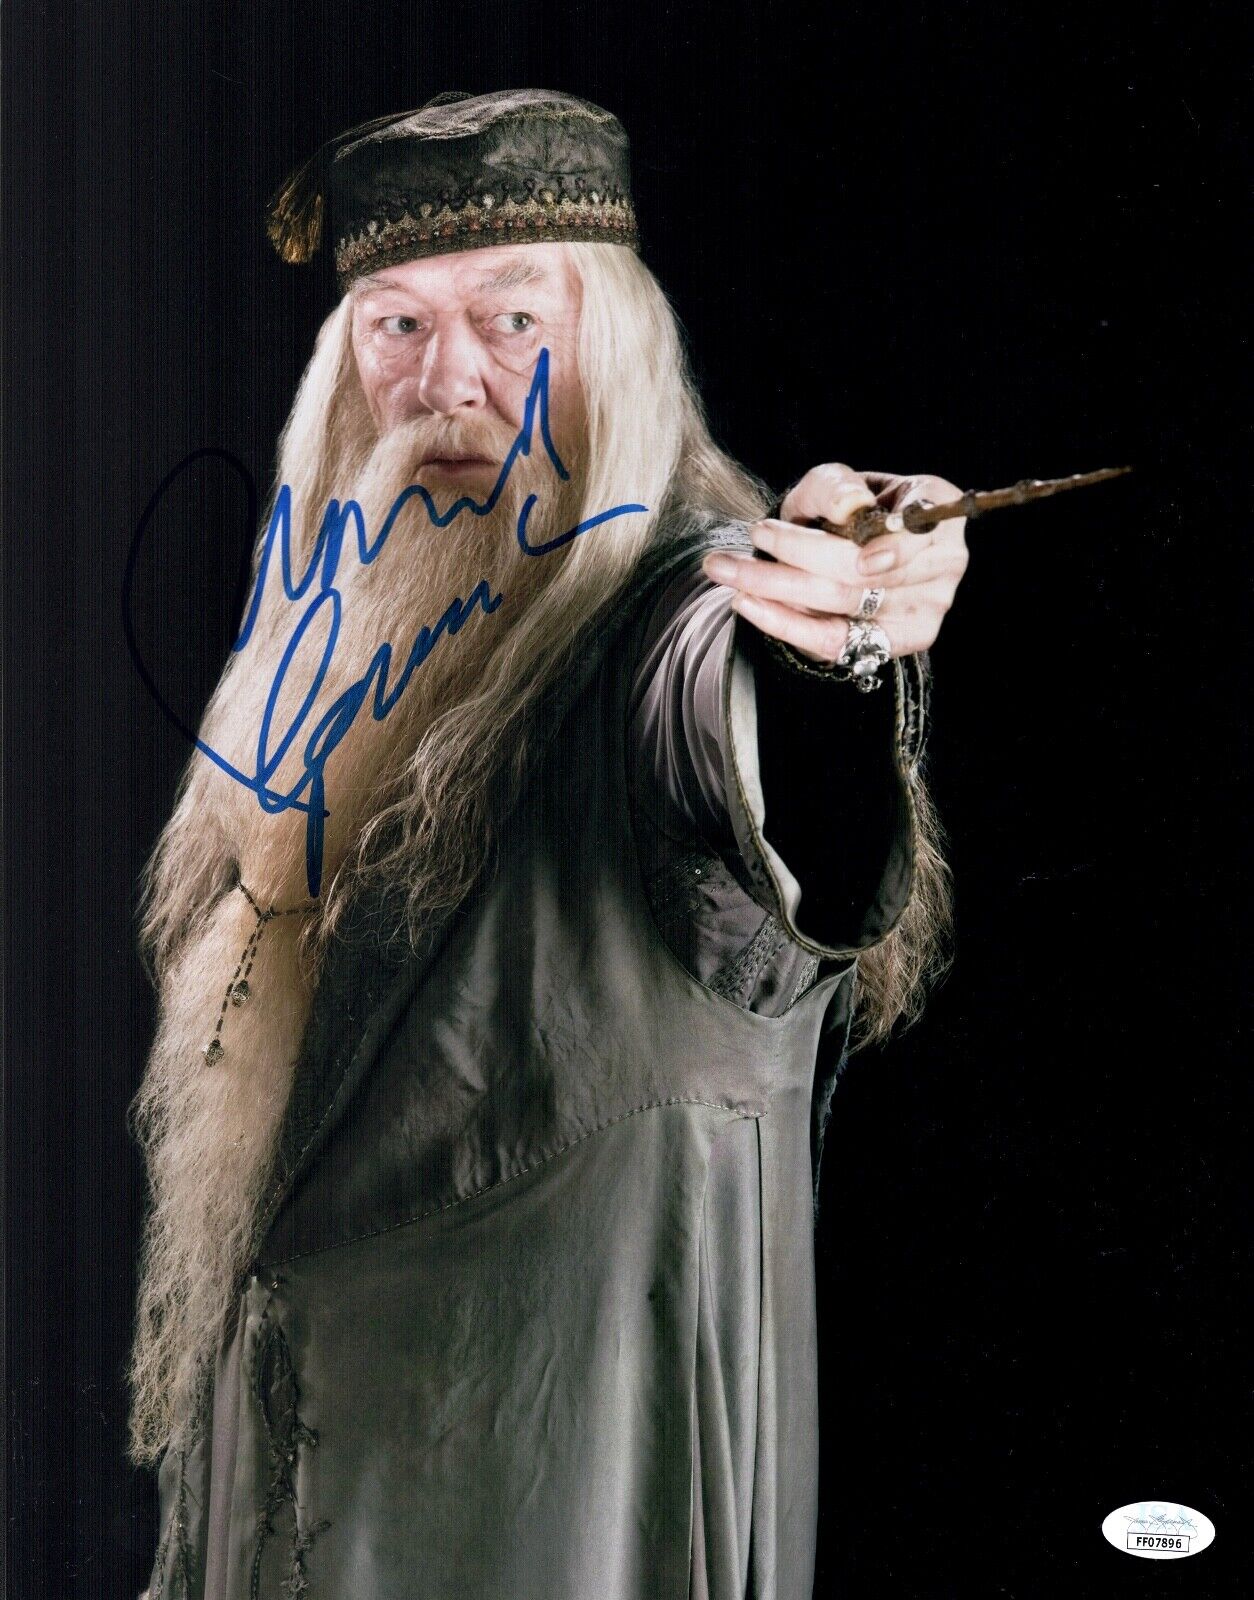 Michael Gambon Signed DUMBLEDORE 11X14 Harry Potter IN PERSON Autograph JSA COA